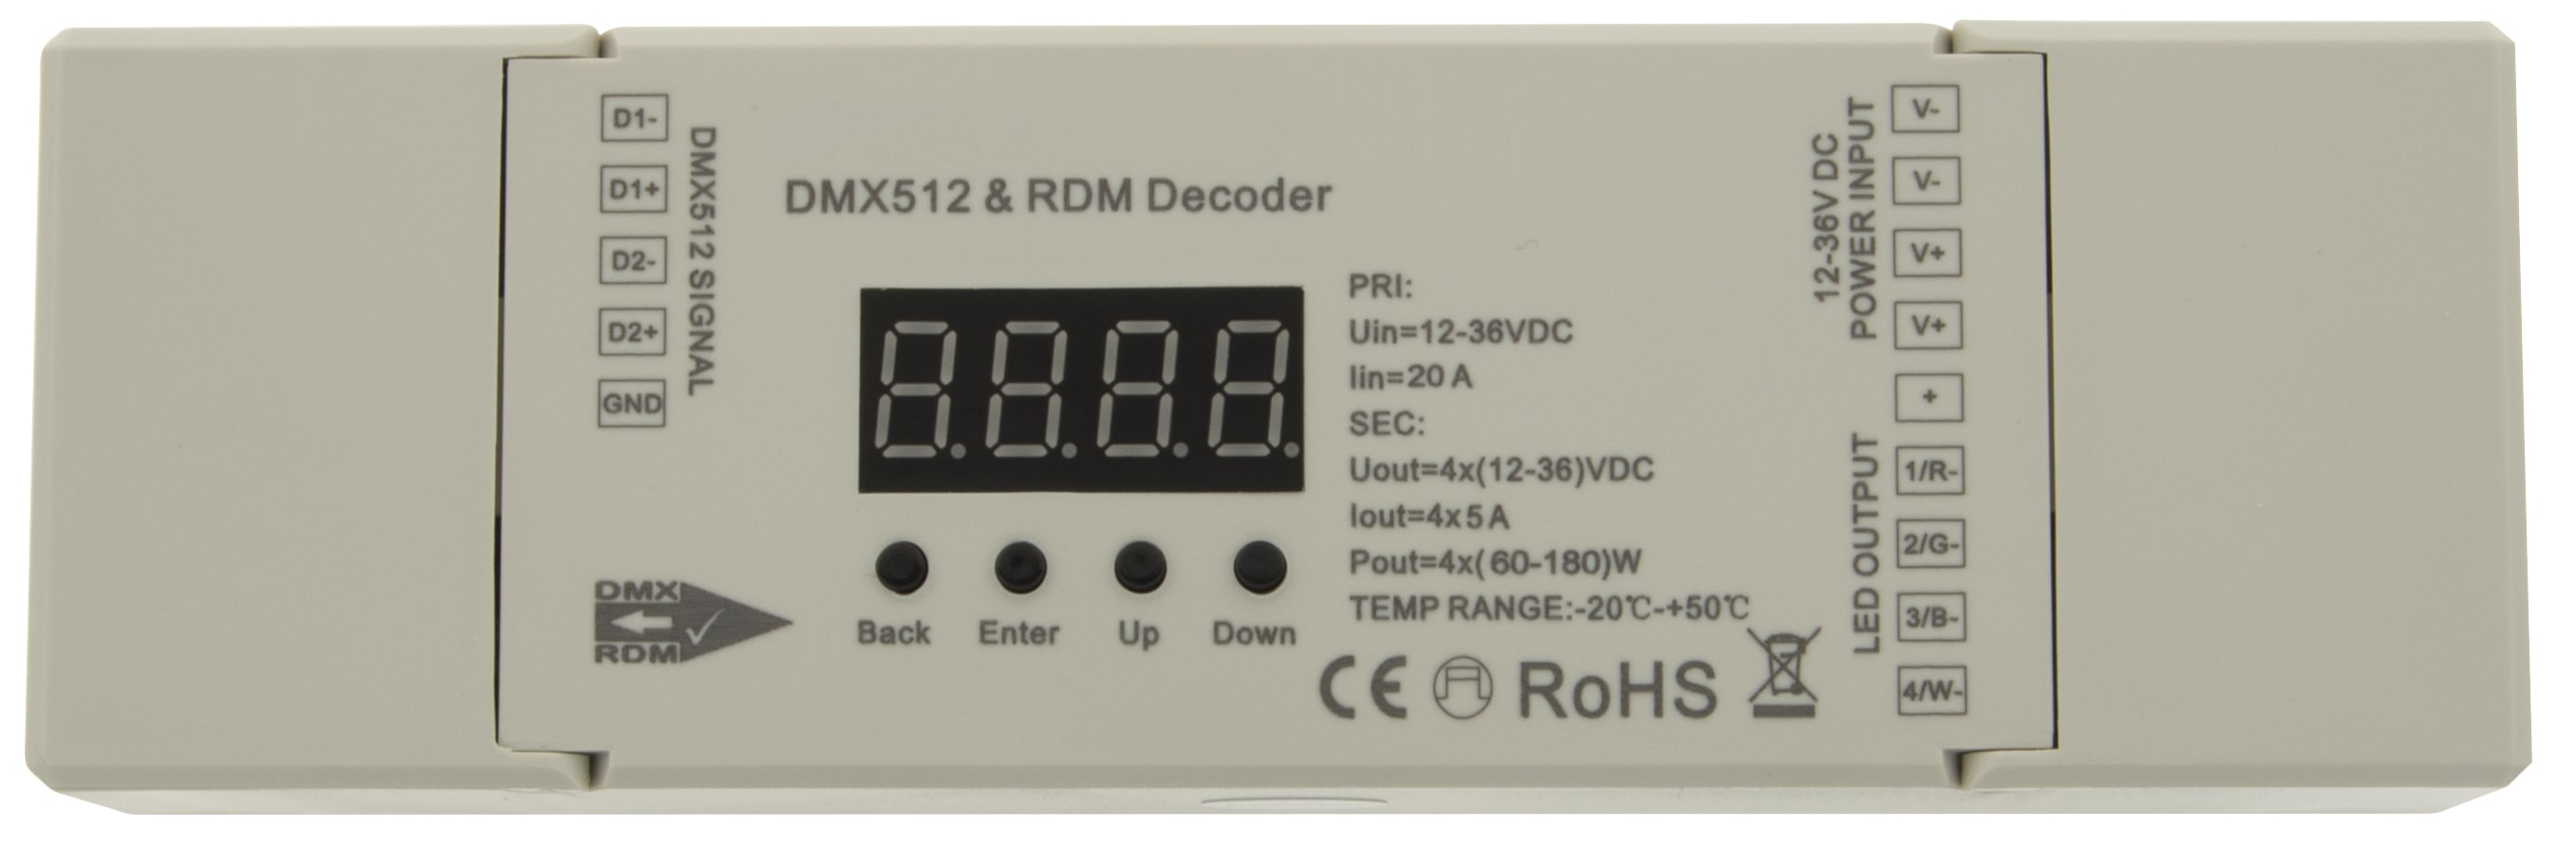 https://autled.com/daten/foto/Produktfoto_LED-DMX-RDM-Decoder-RGBW-4CH_1_v1.jpg